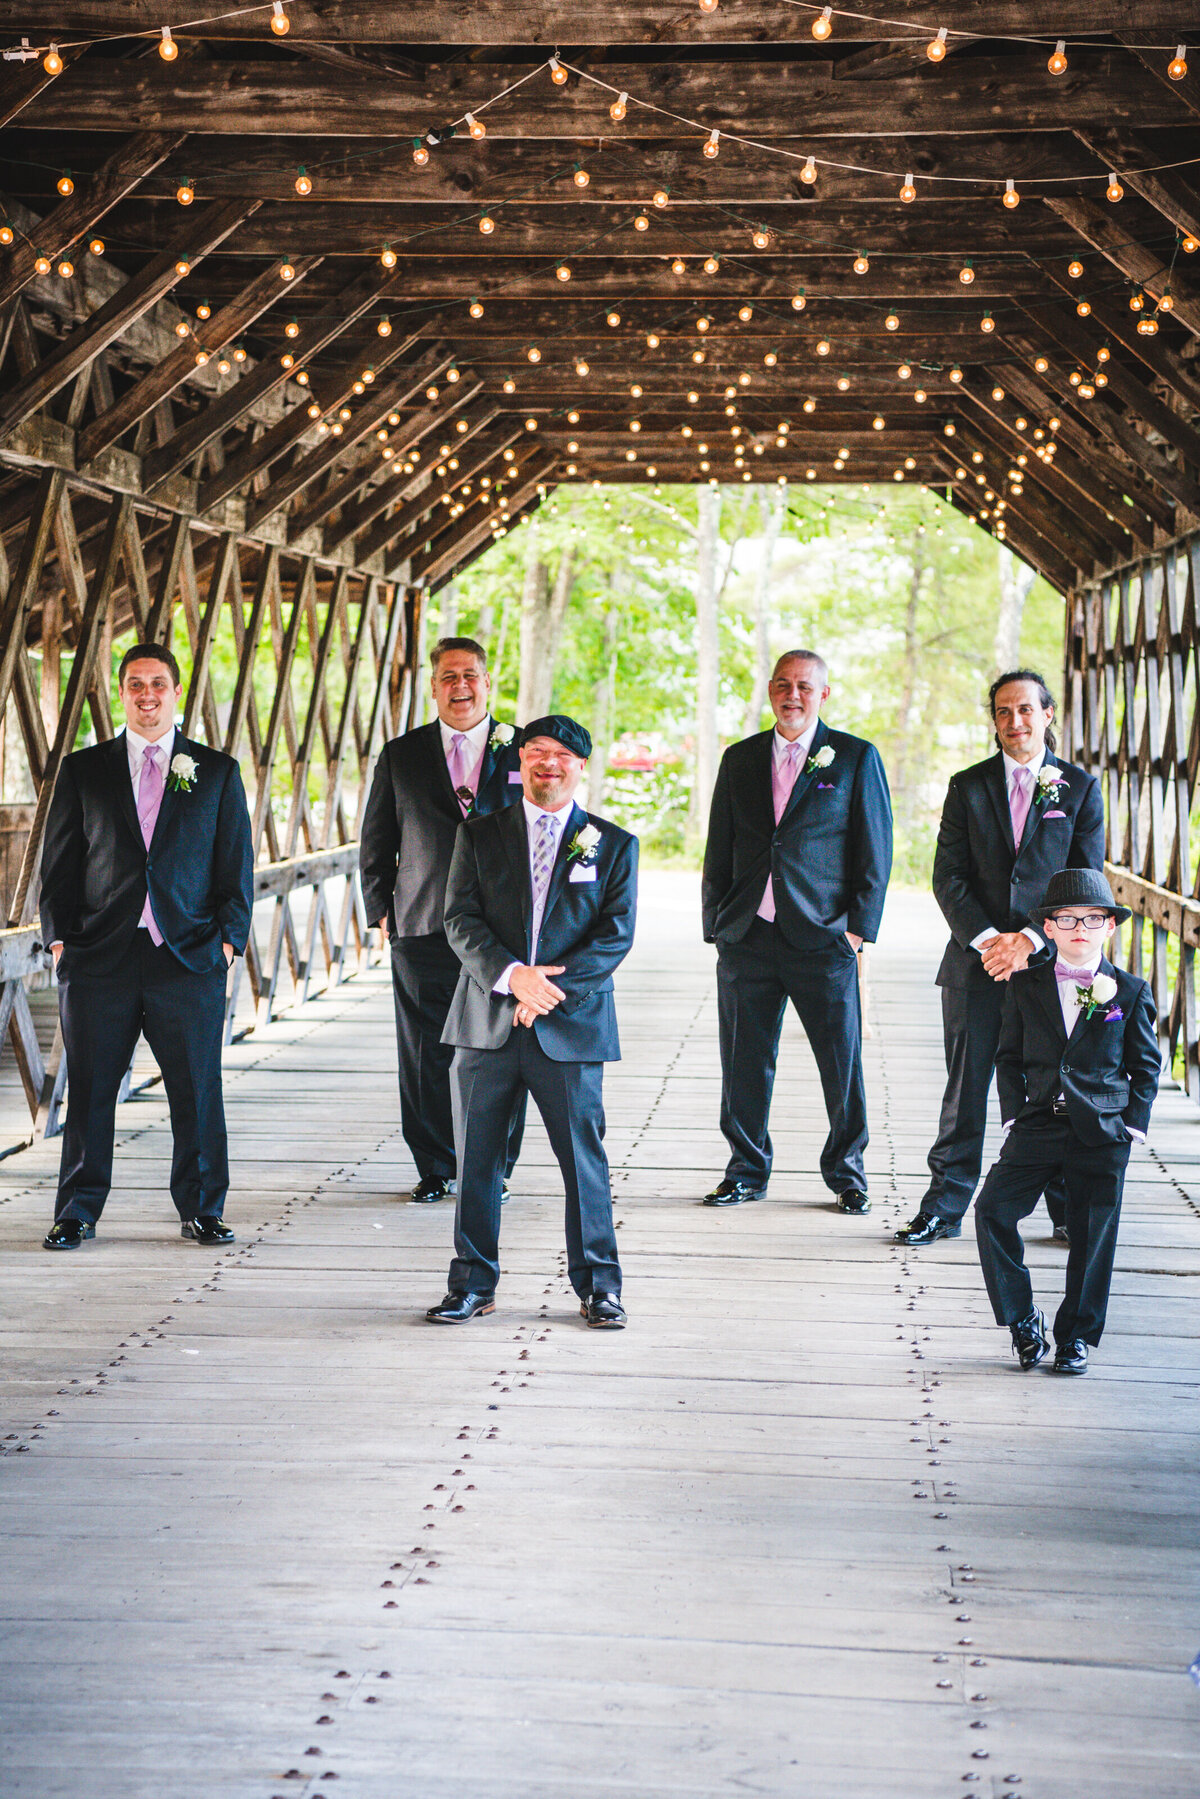 New Hampshire Wedding Photo of Groomsmen under Bull Run lights